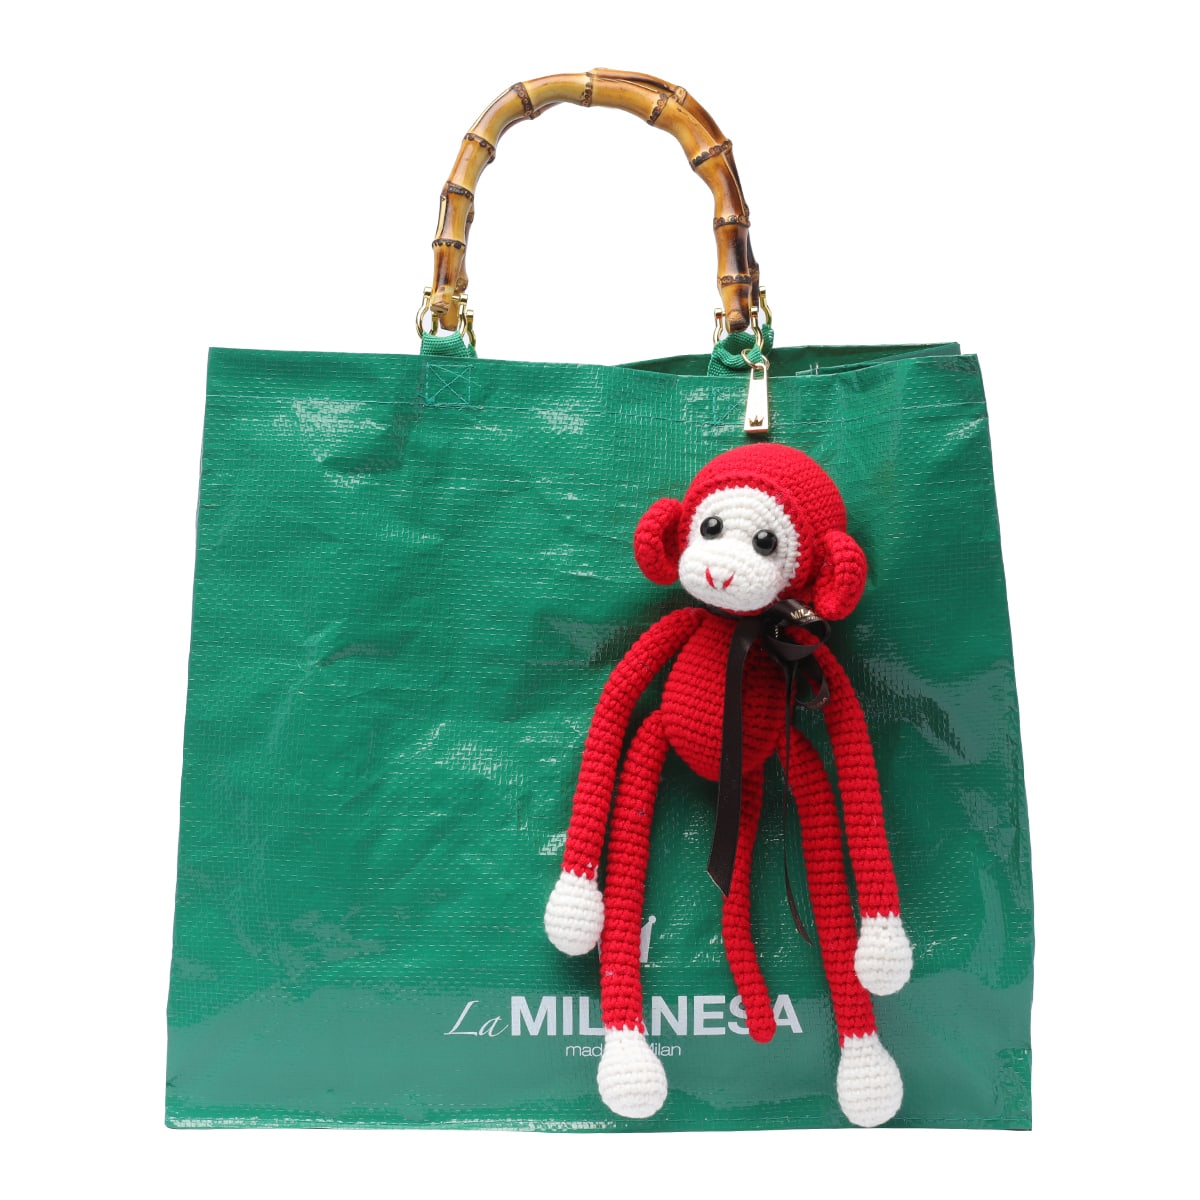 Lamilanesa Sbagliato Shopping Bag In Green